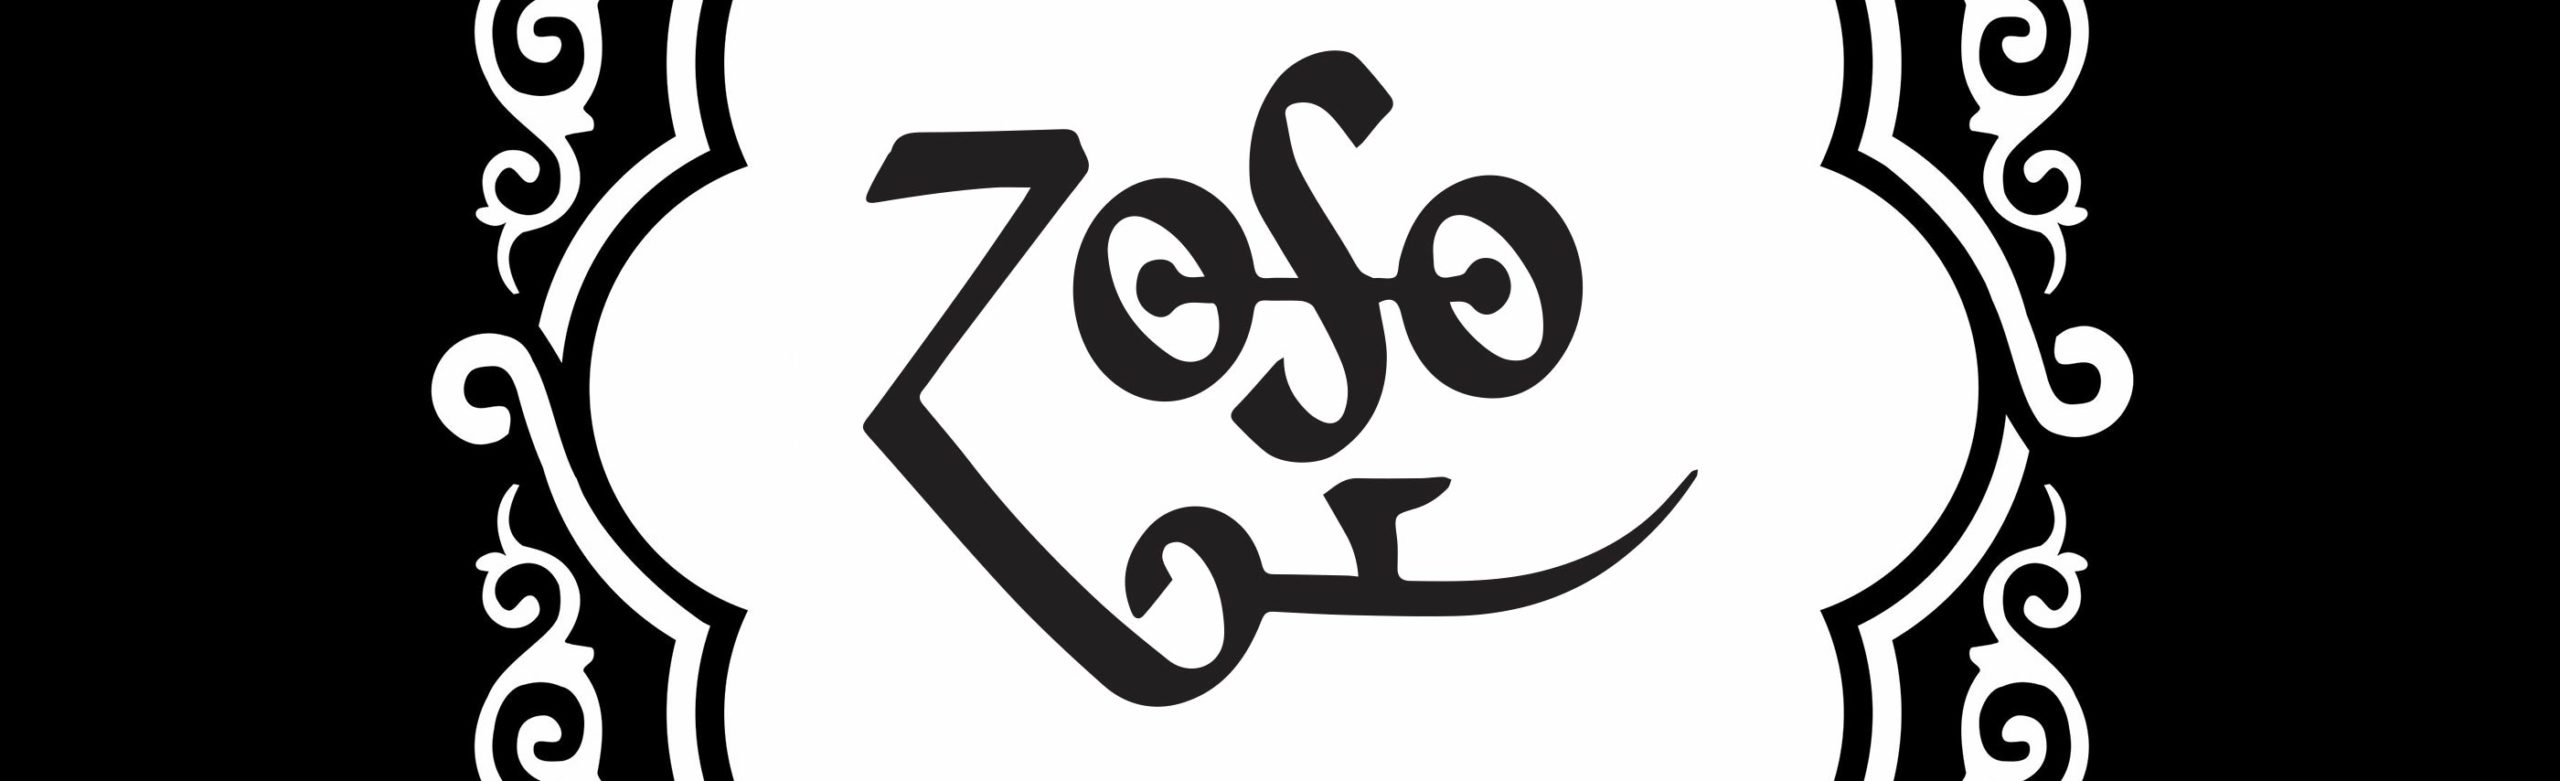 Zoso Tickets + Logjam Merchandise Giveaway Image